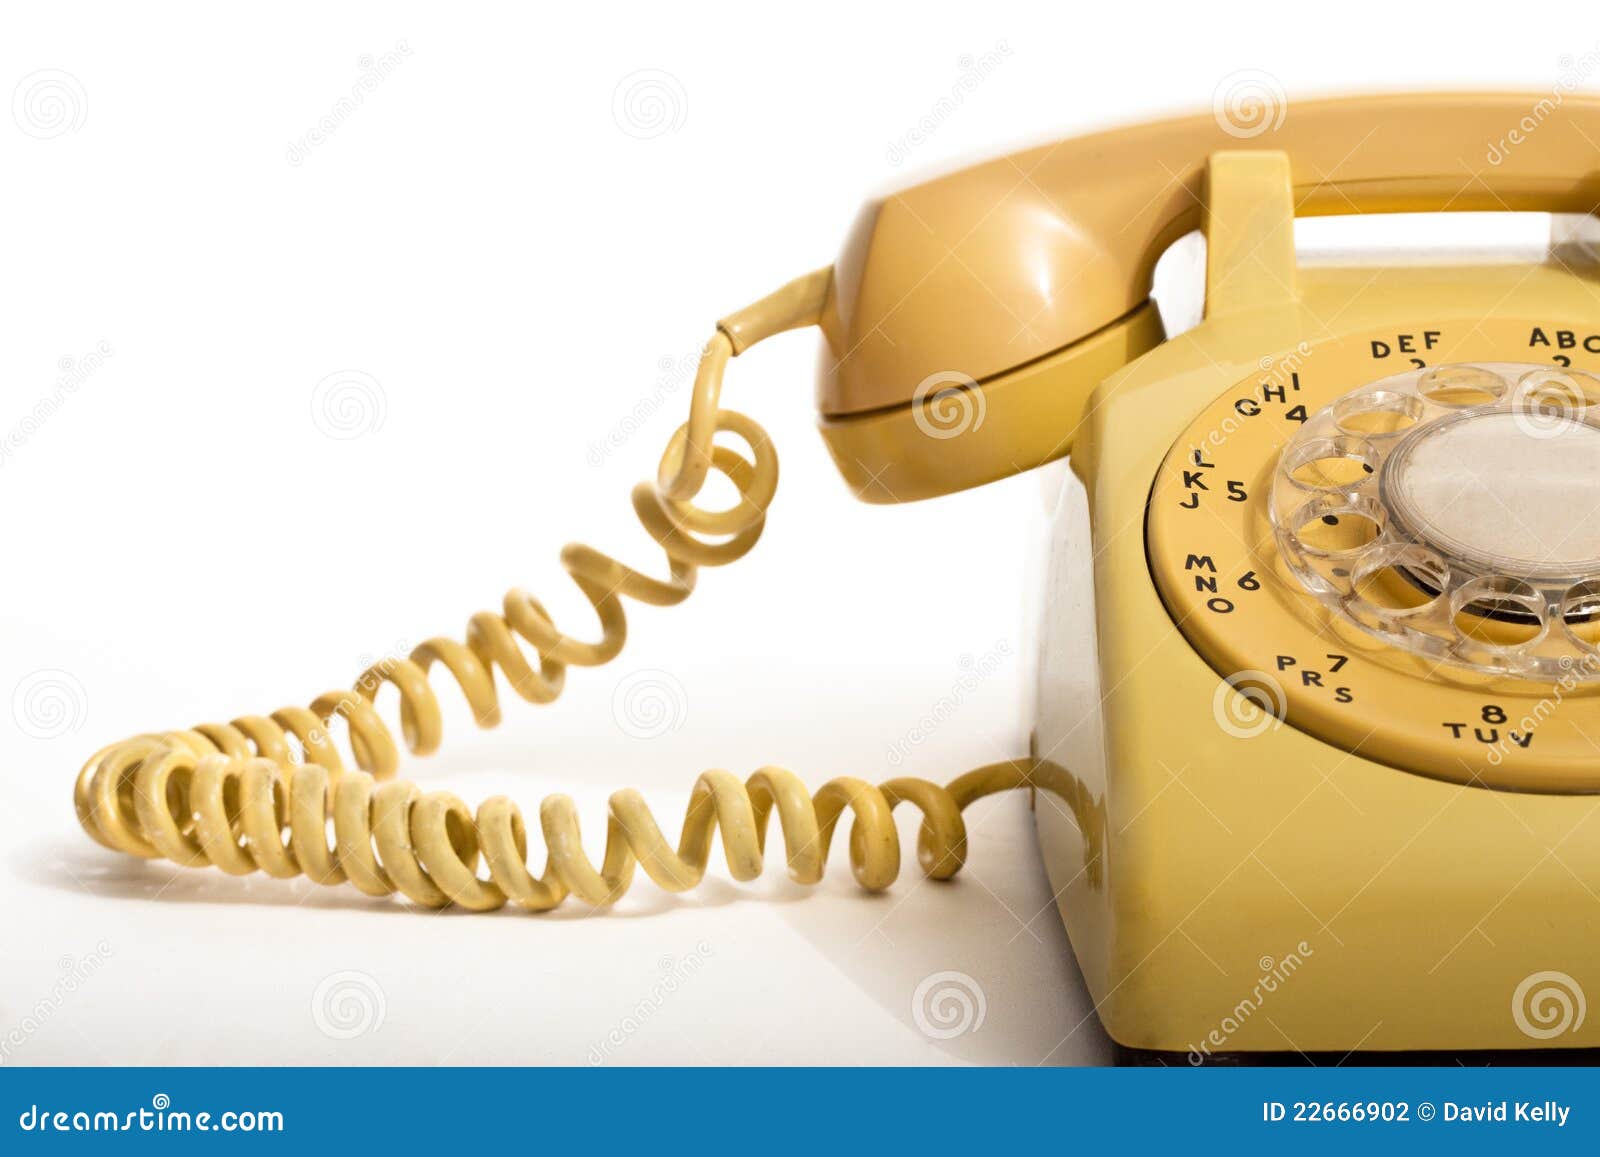 yellow dial phone